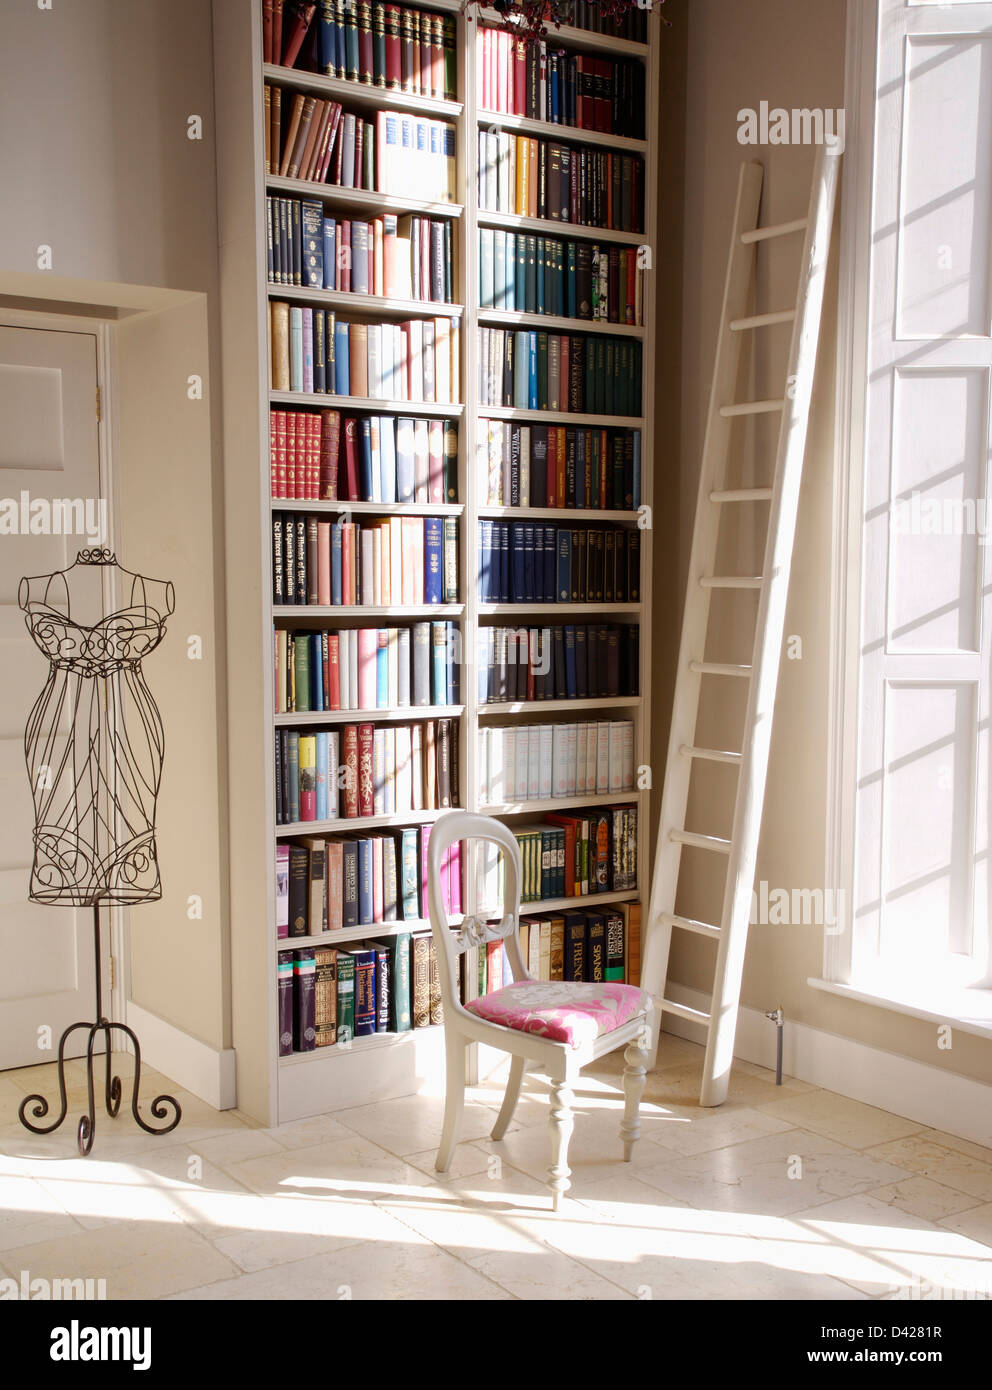 White Ladder Beside Floor To Ceiling Bookshelves In Hall With